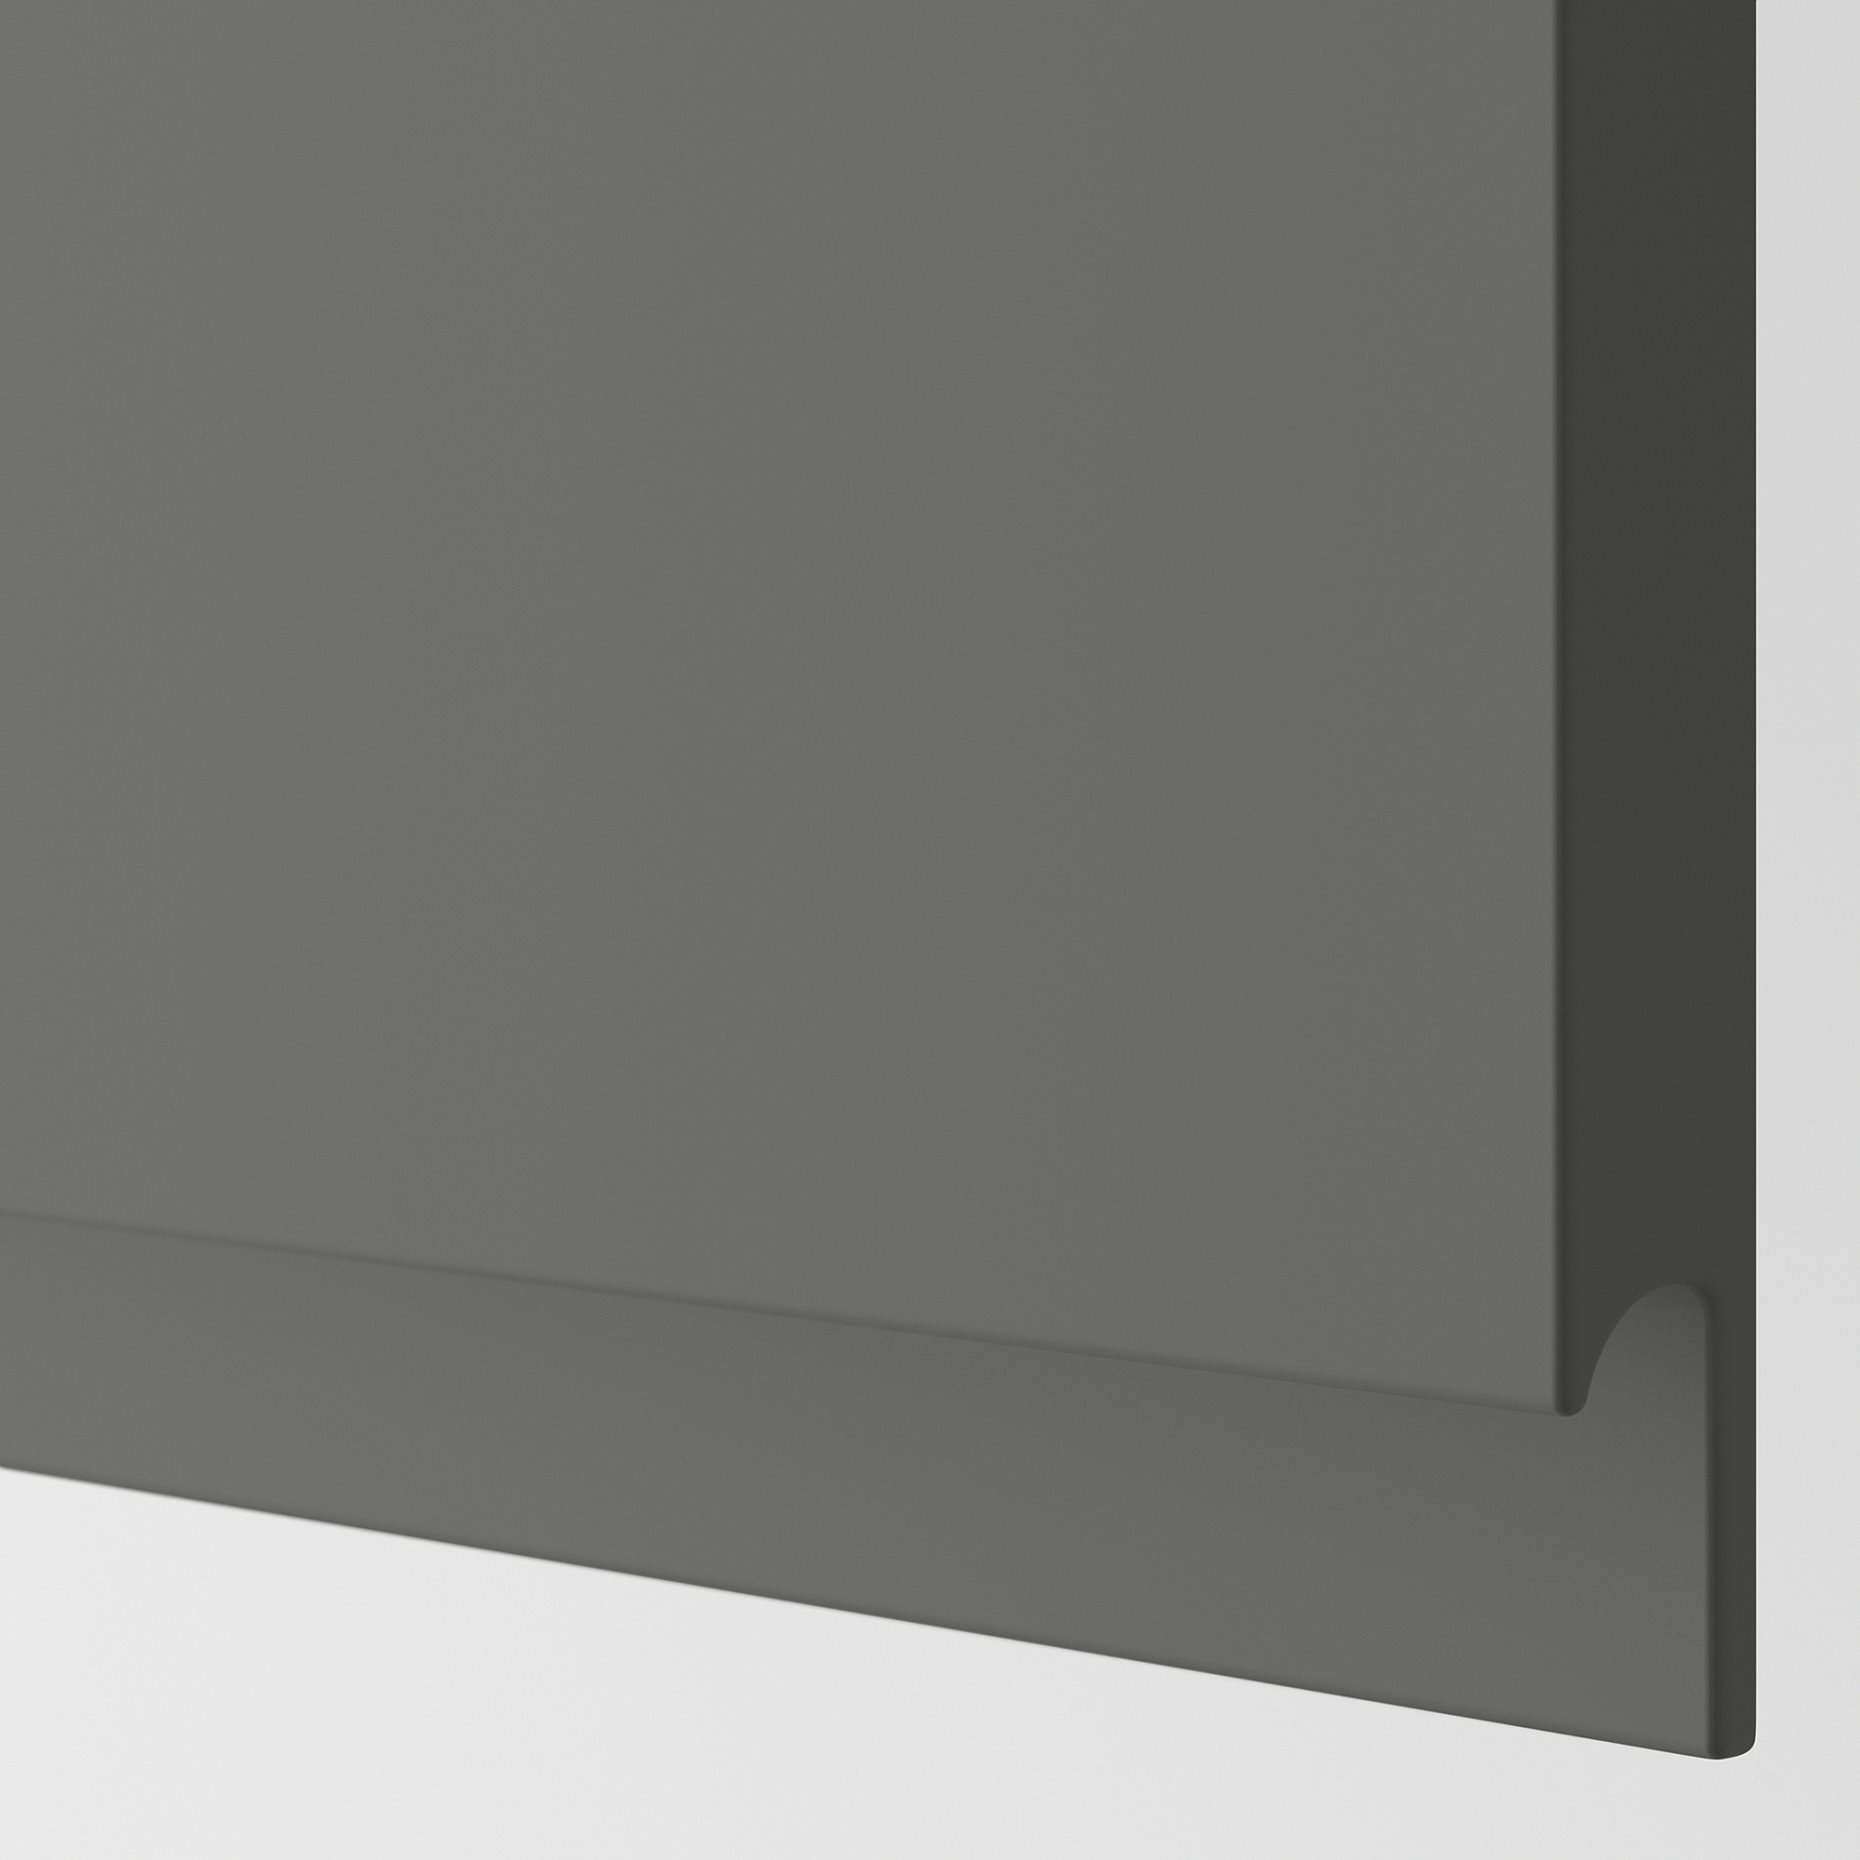 METOD, ντουλάπι βάσης για νεροχύτη με 2 πόρτες/πρόσοψη, 80x60 cm, 194.604.31